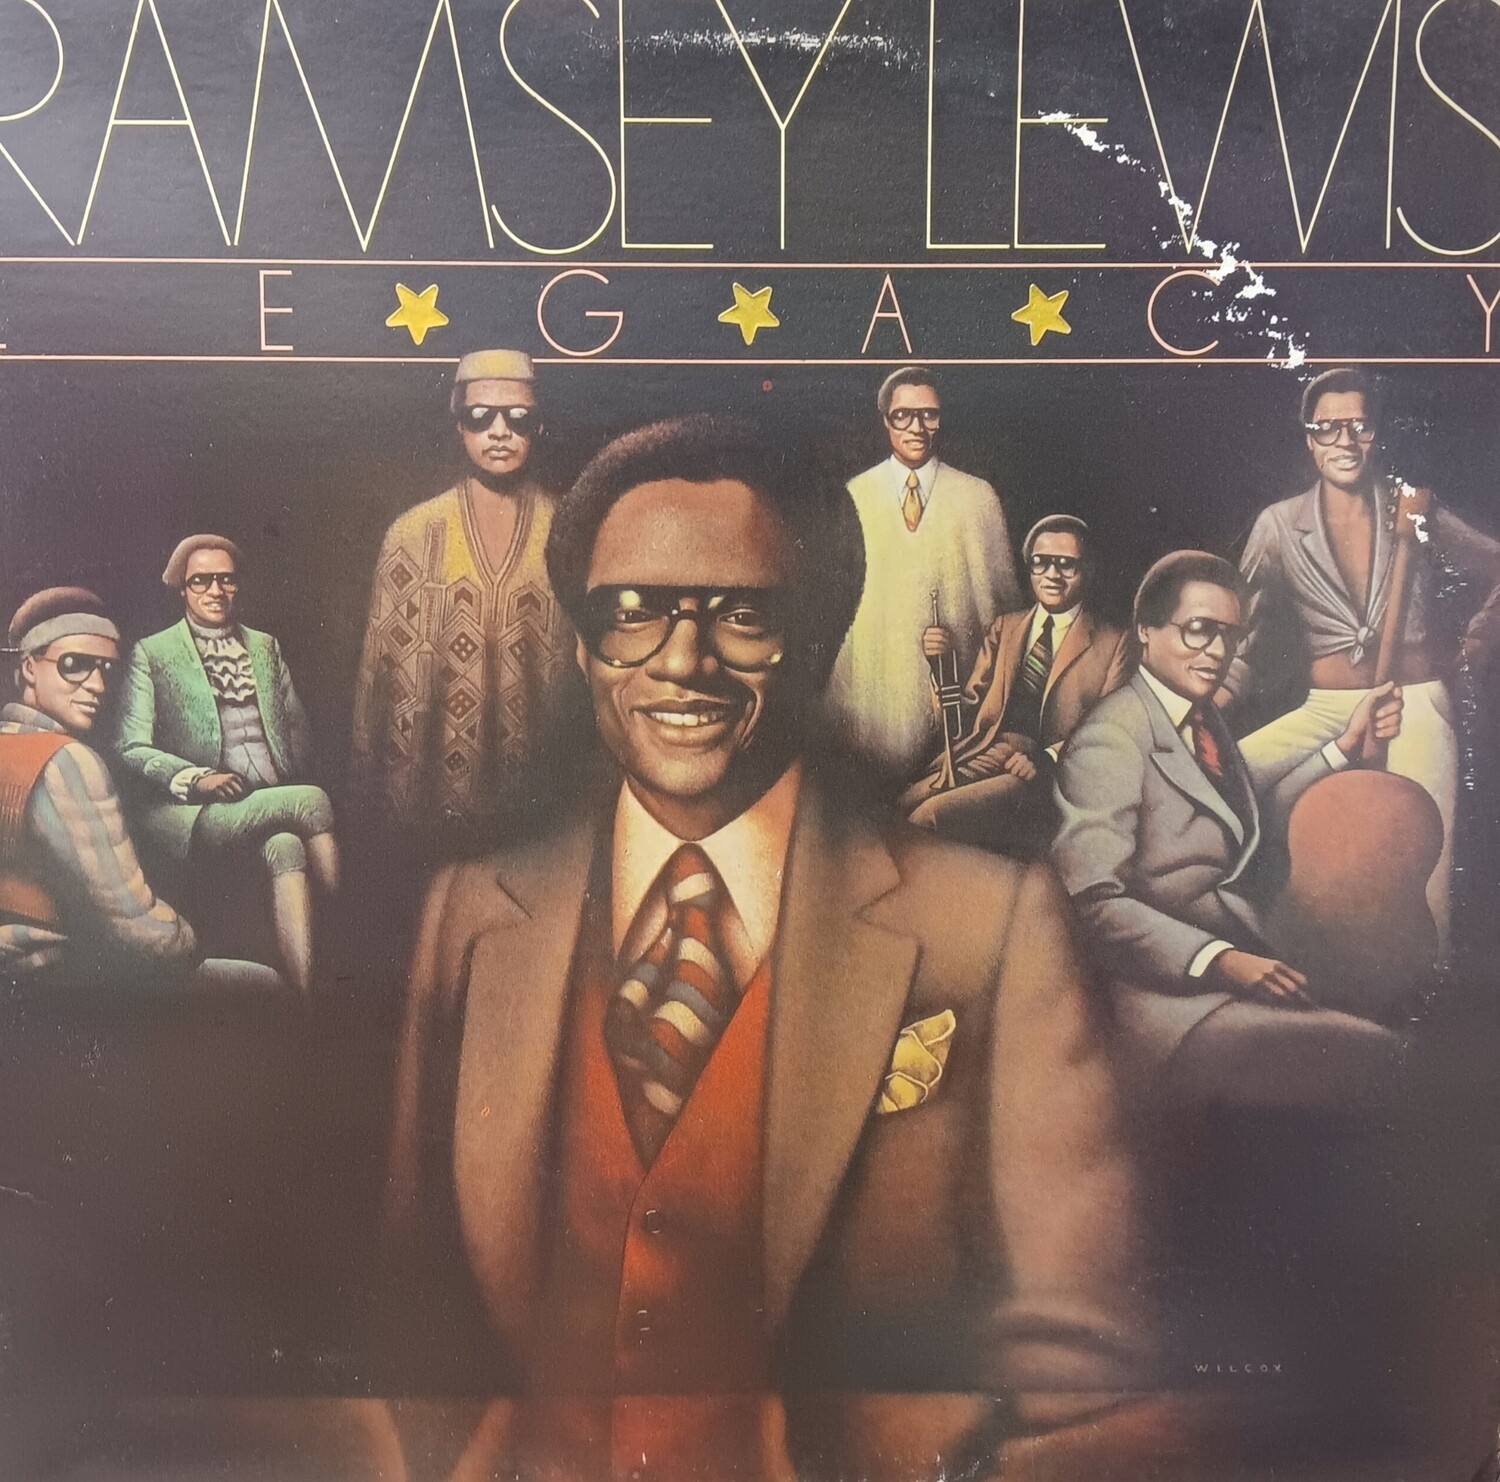 RAMSEY LEWIS - Legacy